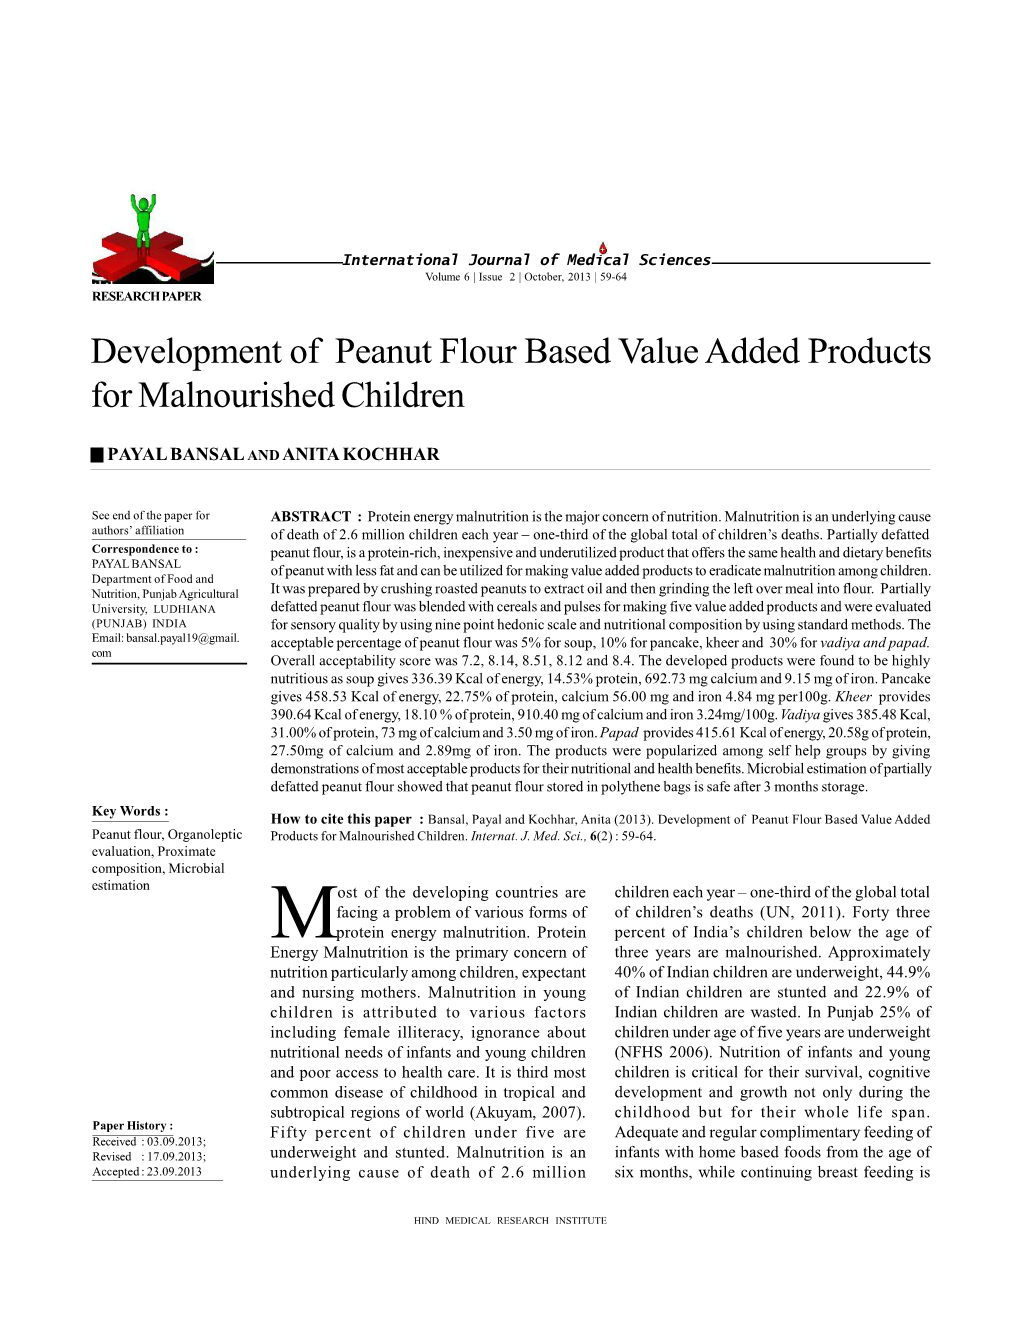 Development of Peanut Flour Based Value Added Products for Malnourished Children